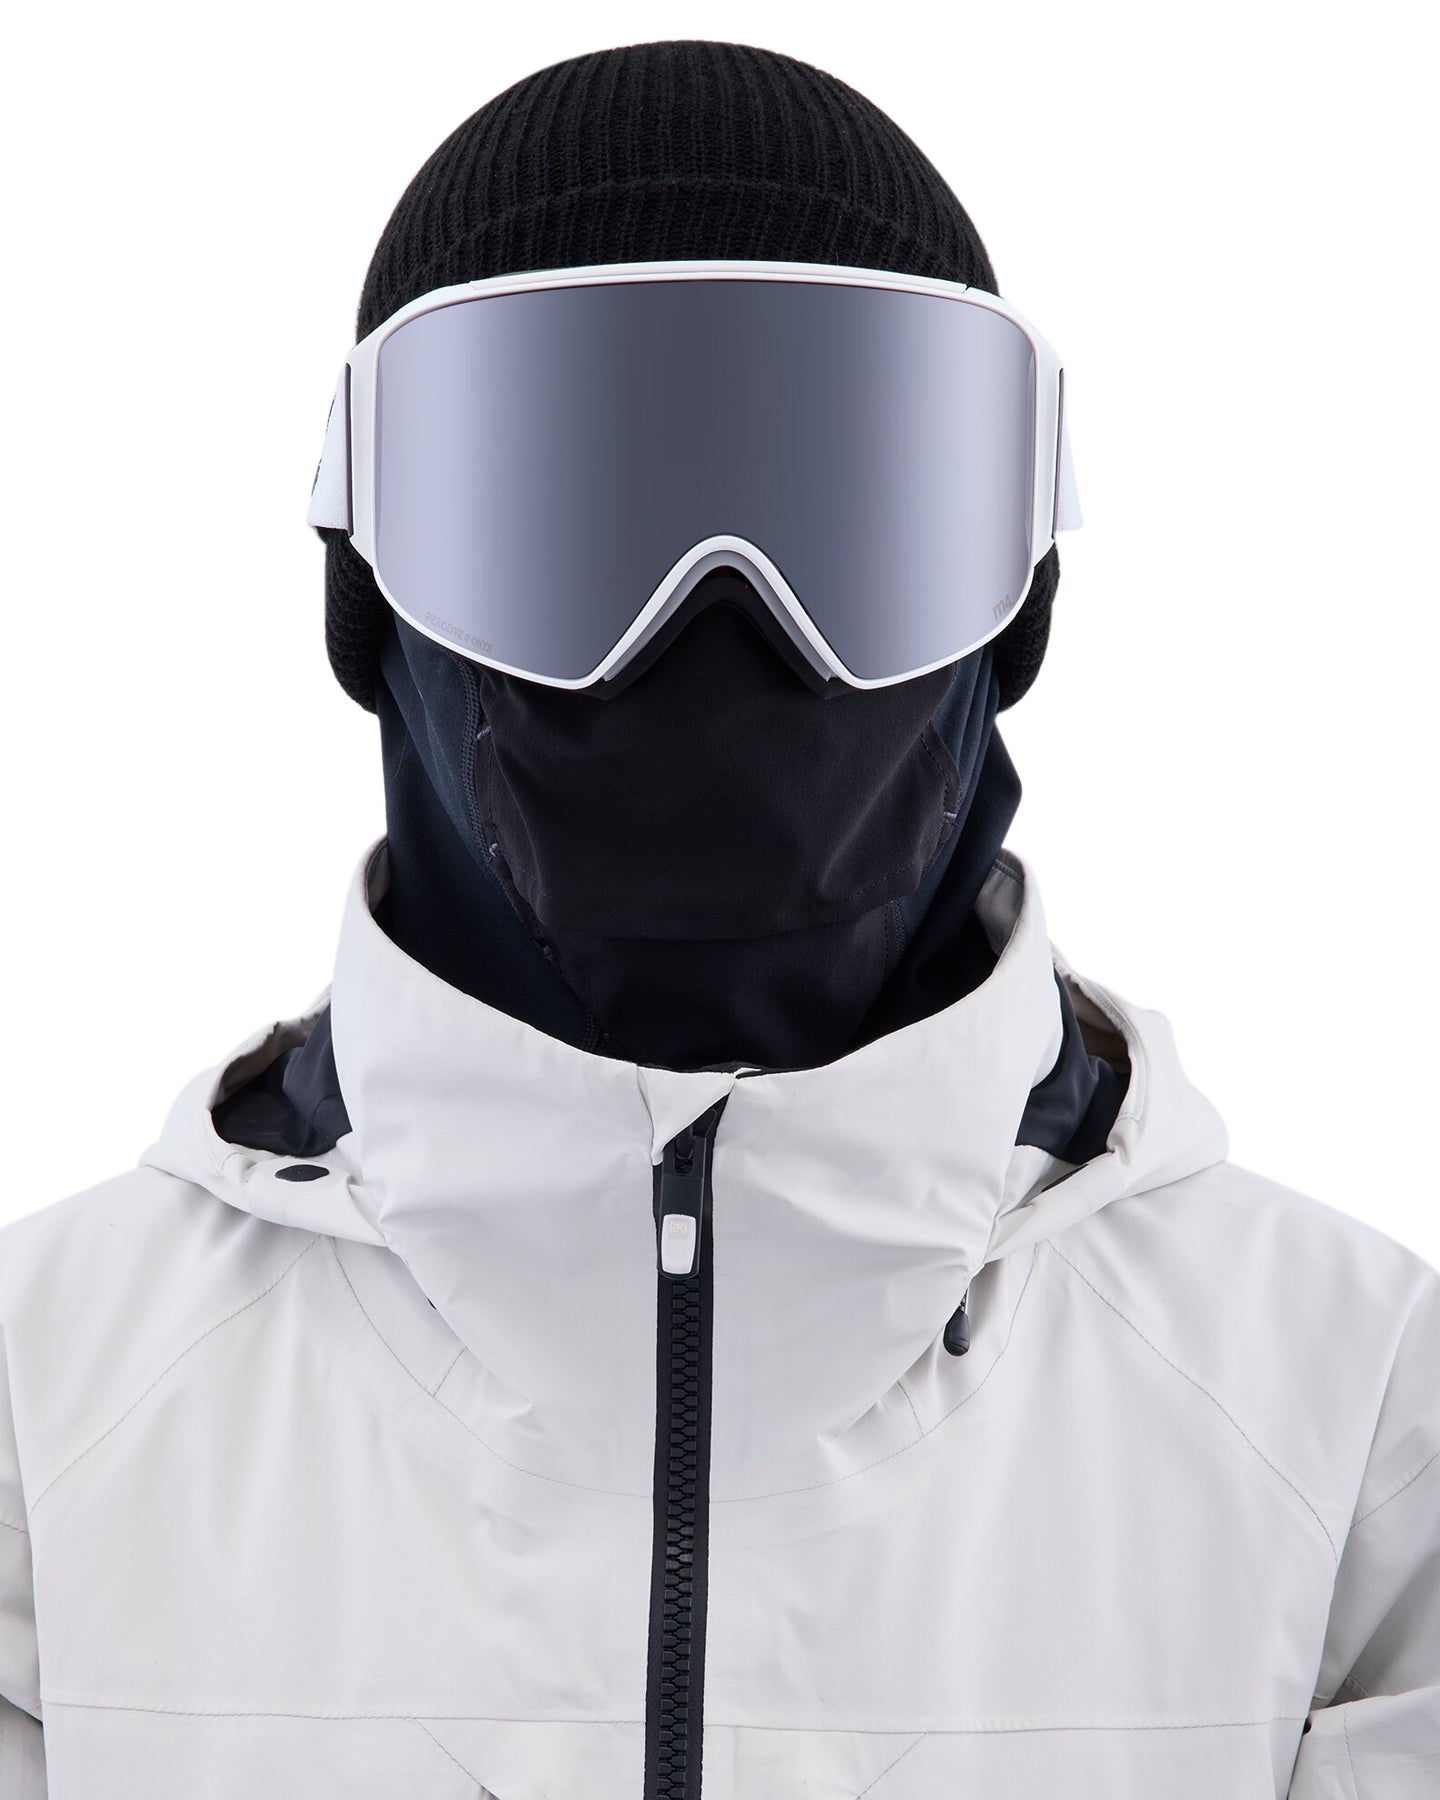 Anon M4 Cylindrical Low Bridge Snow Goggles + Bonus Lens + Mfi® Face Mask - Smoke/Perceive Sunny Onyx Lens Men's Snow Goggles - Trojan Wake Ski Snow